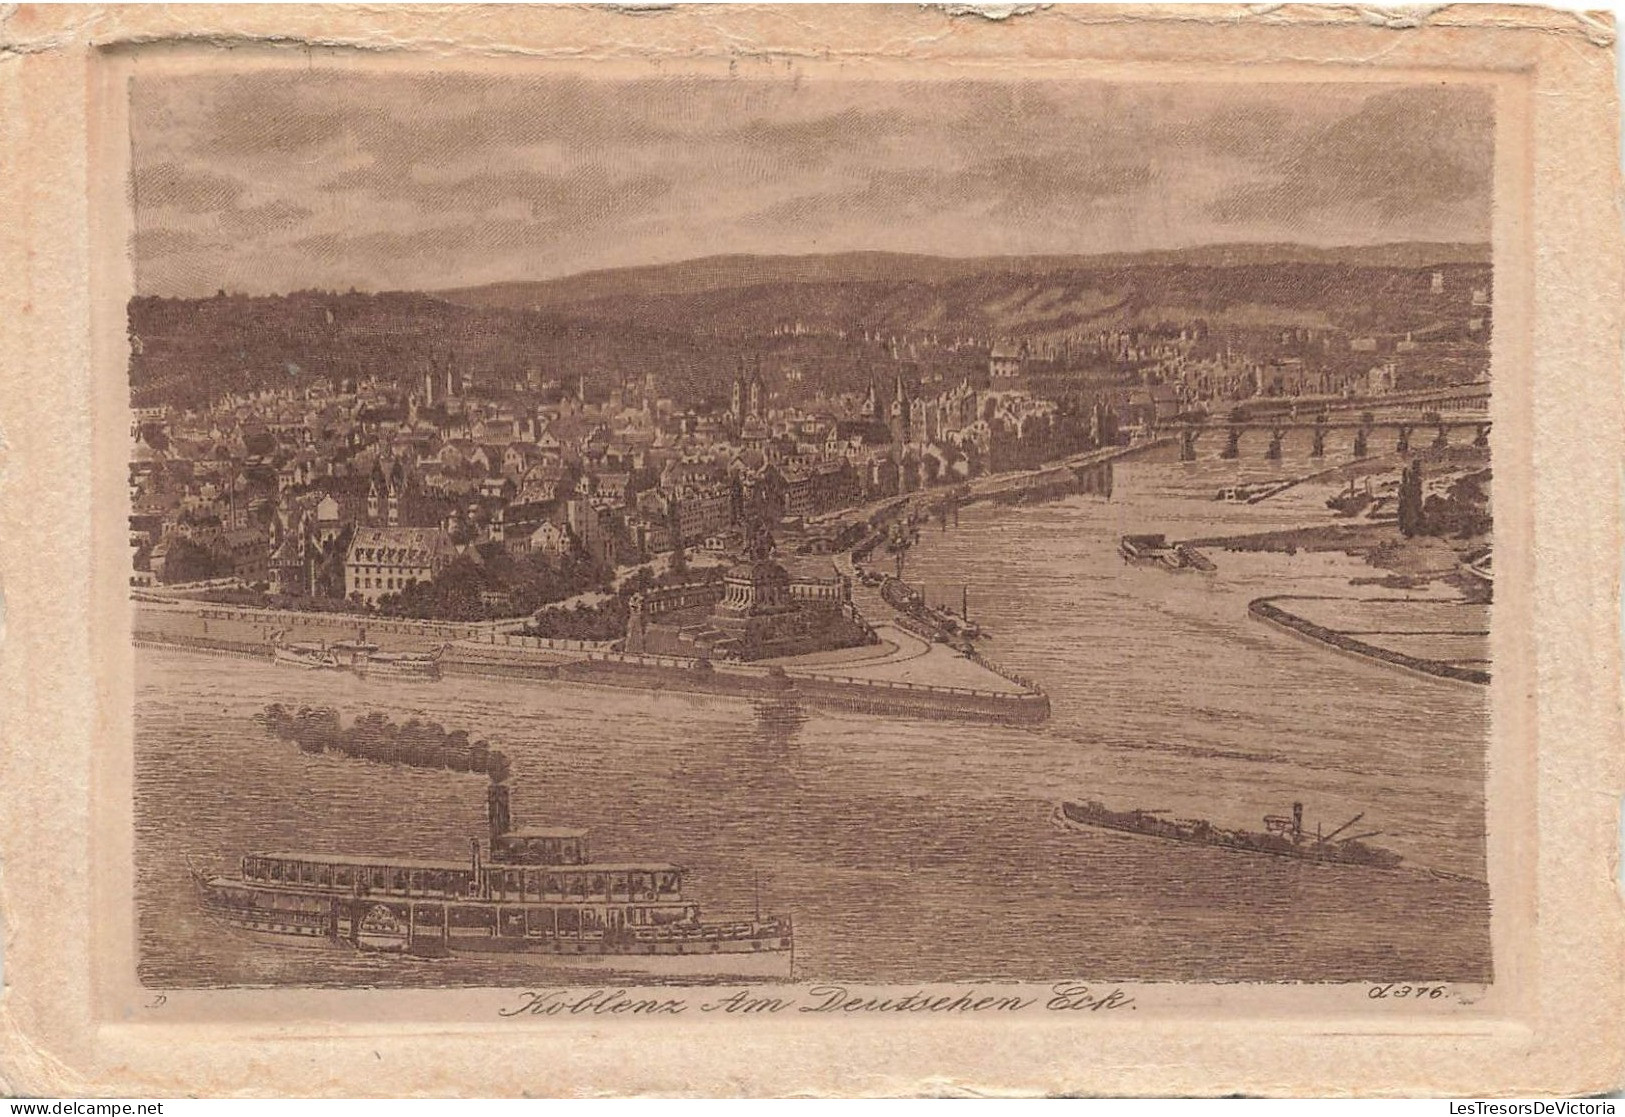 ALLEMAGNE - Koblenz Am Deutsehen - Dessin - Vue Générale - Pont - Bateau - Ville - Carte Postale Ancienne - Koblenz